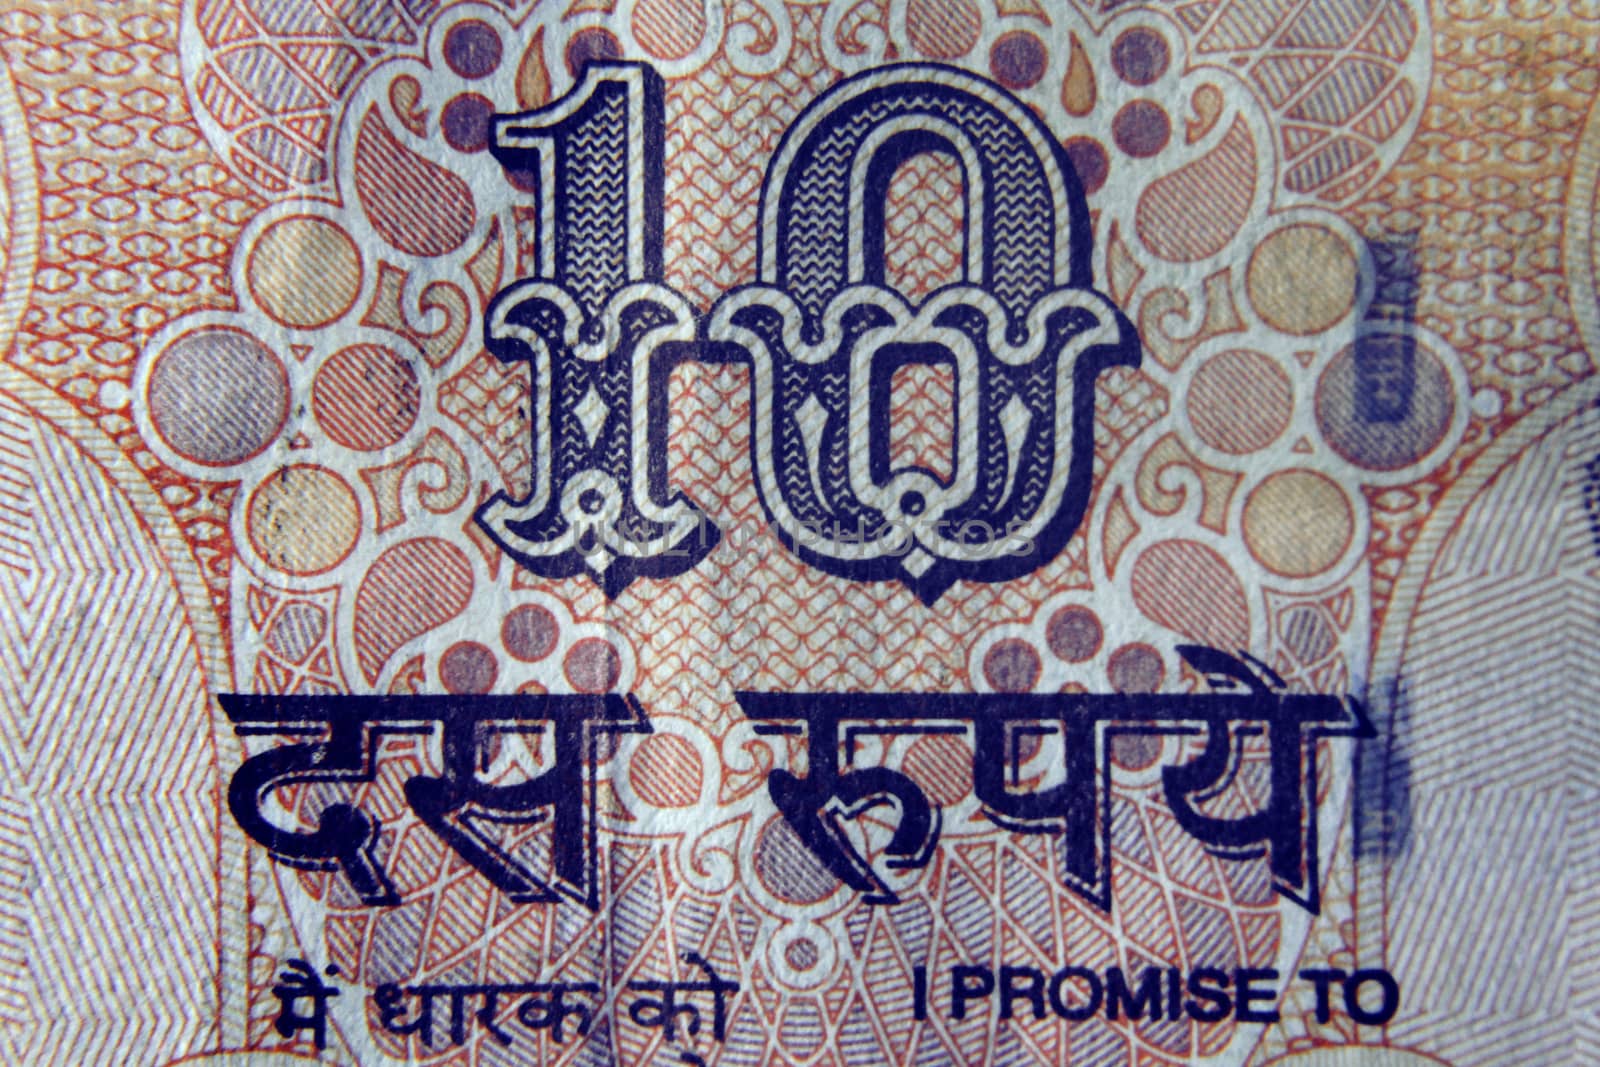 Ten rupee written in Hindi language on Ten rupee banknote